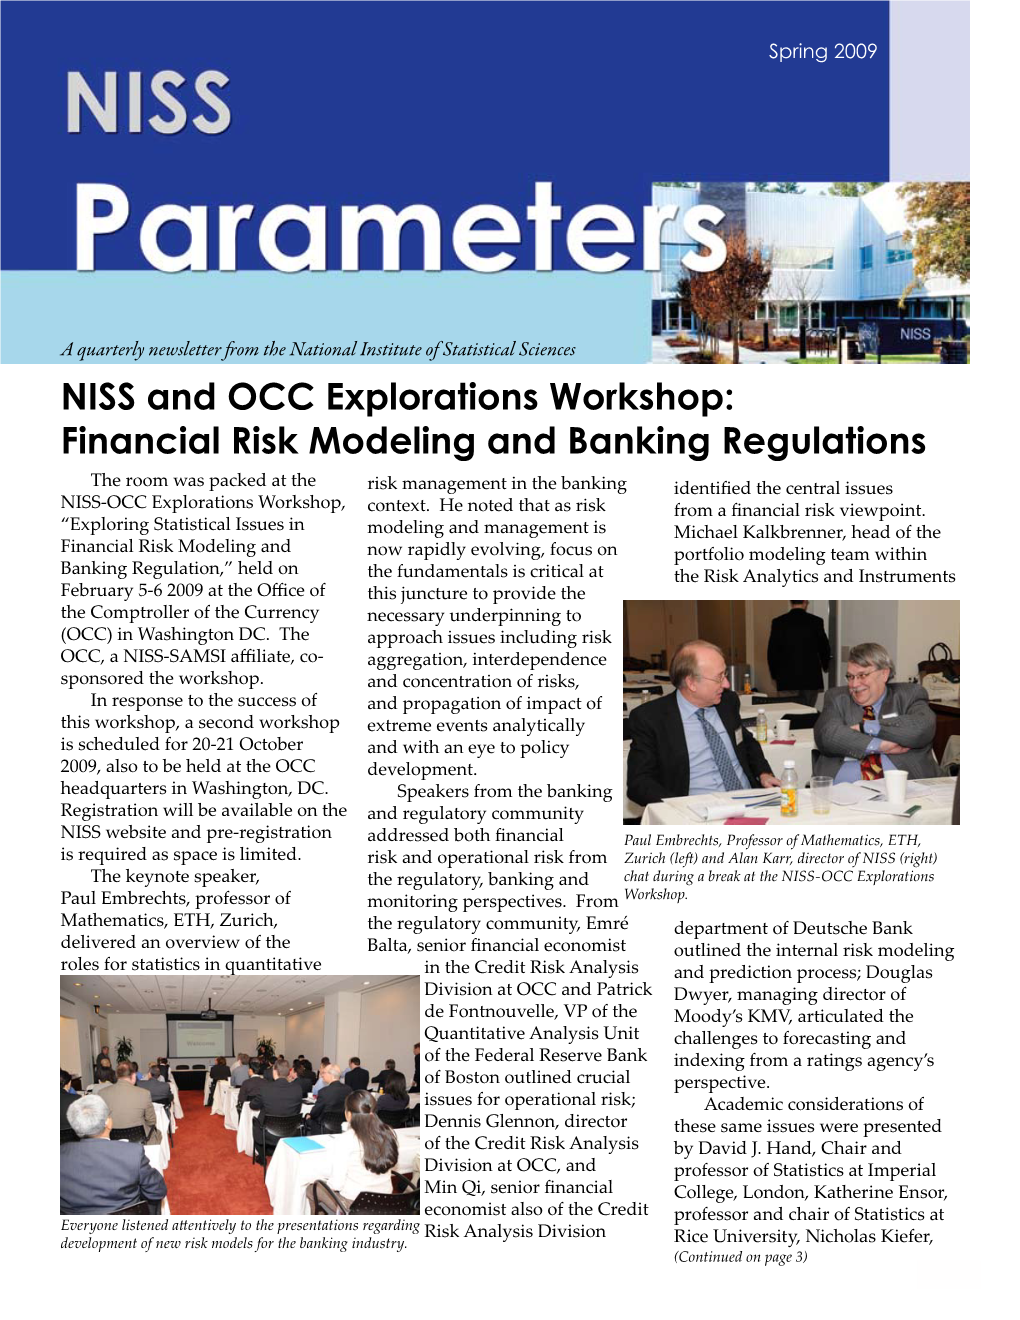 NISS and OCC Explorations Workshop: Financial Risk Modeling